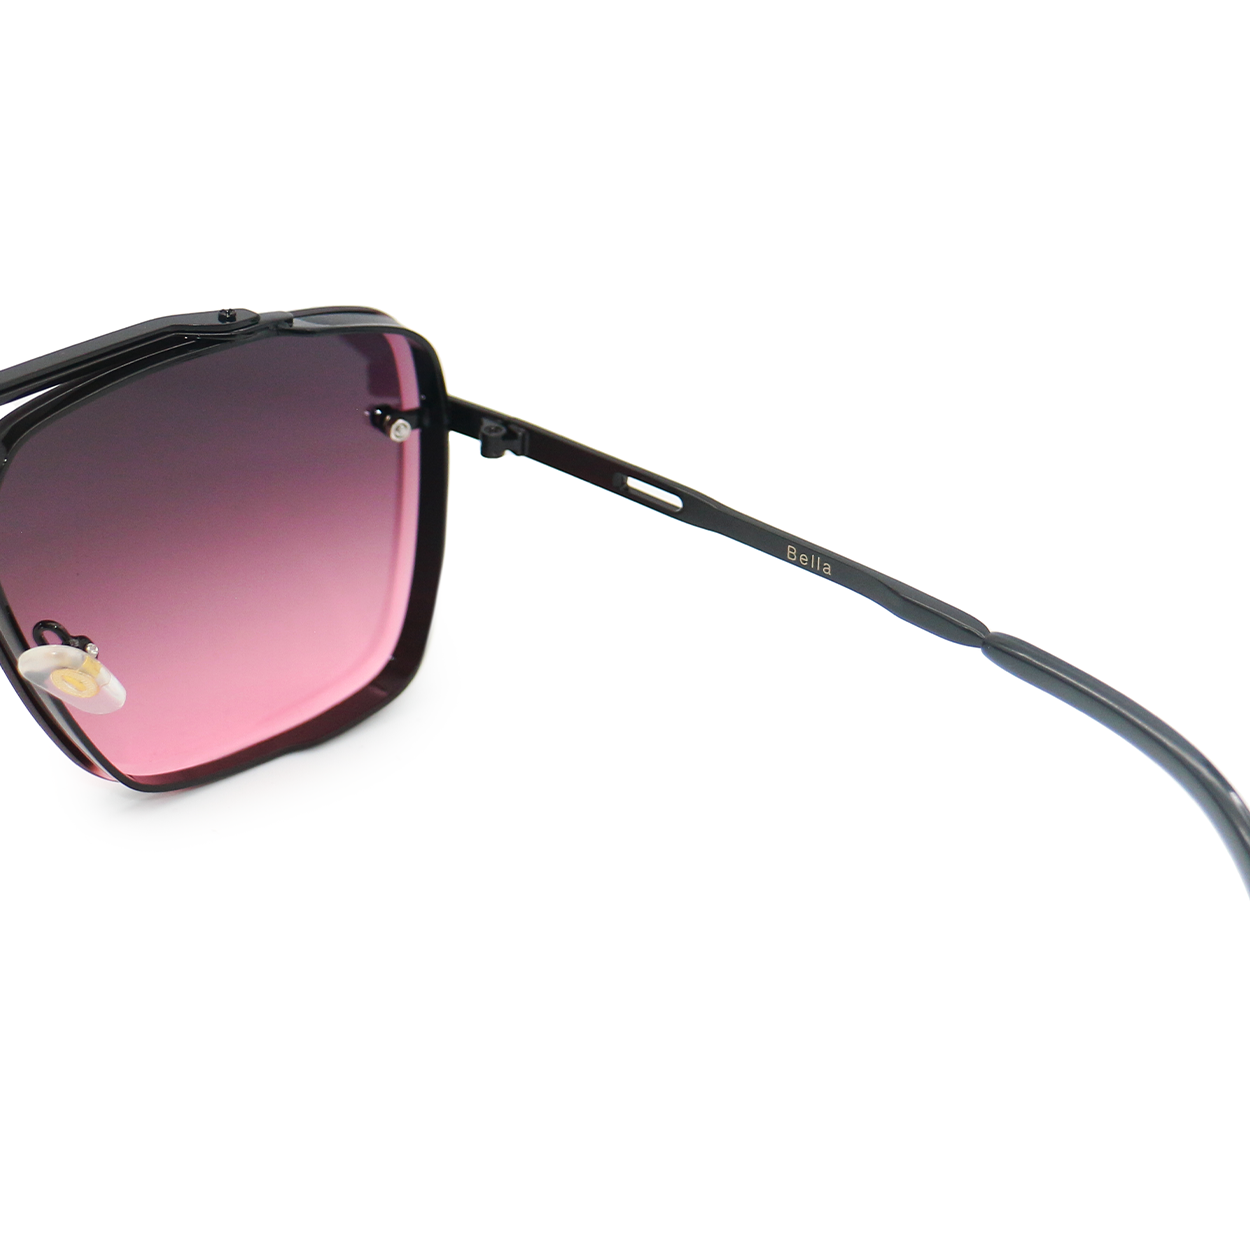 TopFoxx -  Bella Ruby -  Aviator Sunglasses for Women -  Chick women aviators  - Arms Details